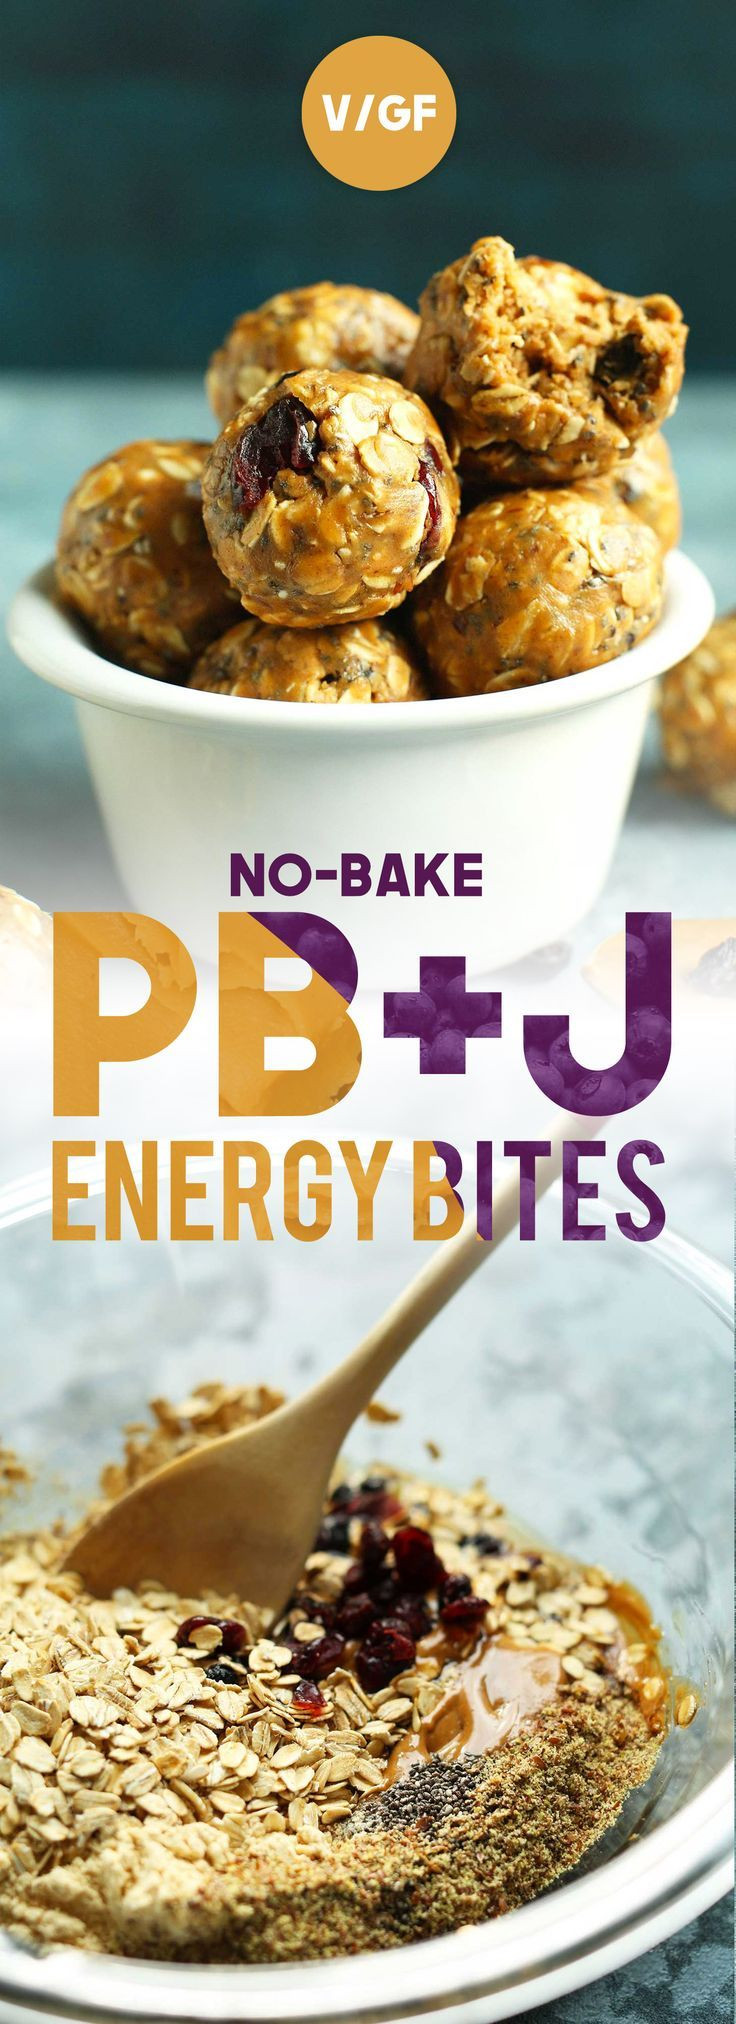 Healthy Energy Snacks
 25 best ideas about No bake energy bites on Pinterest